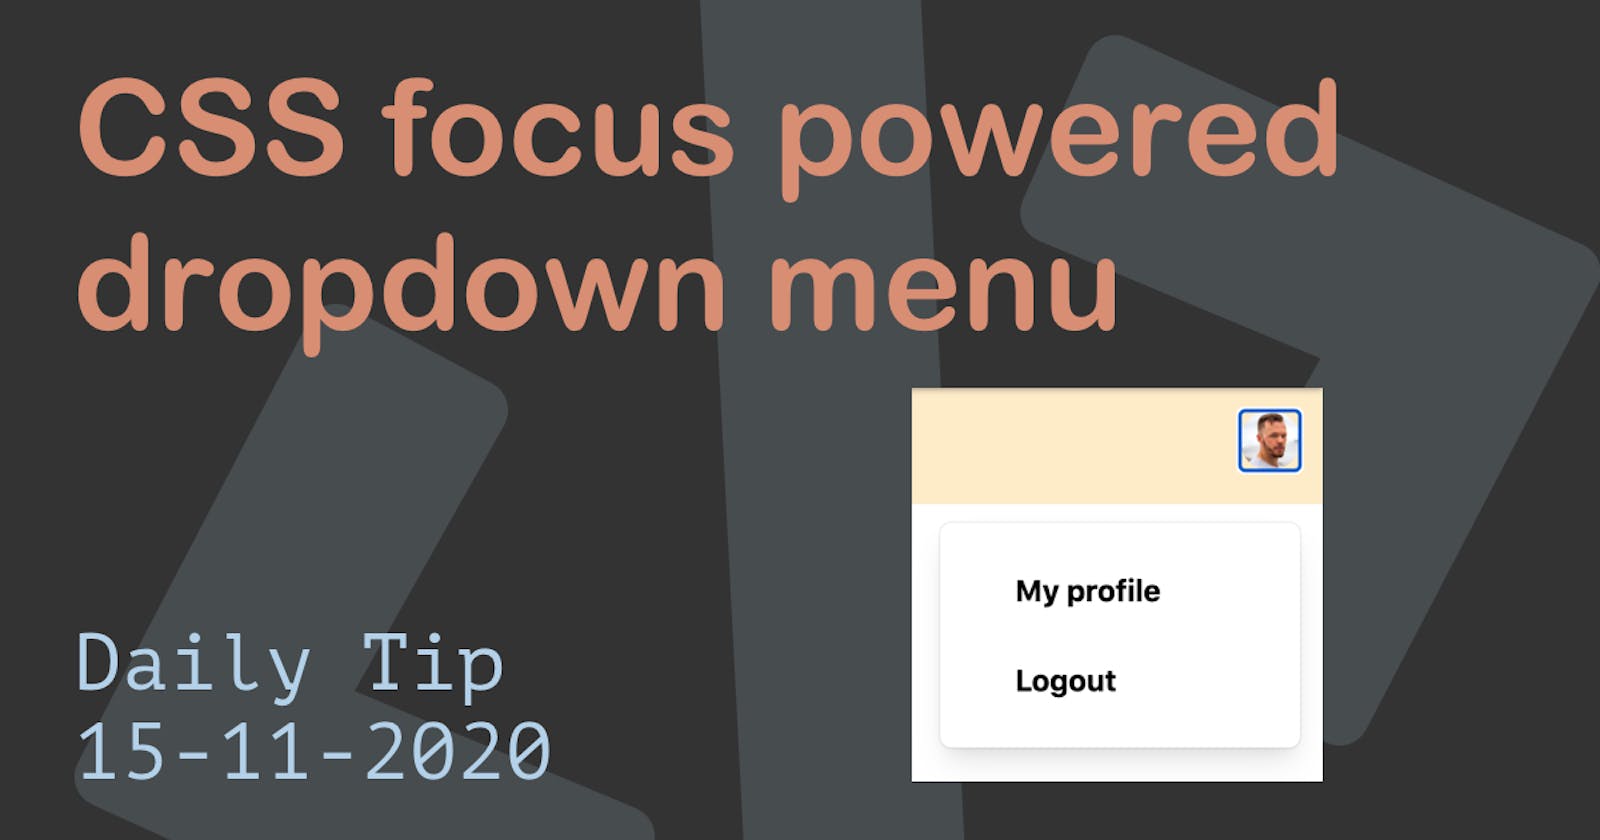 CSS focus powered dropdown menu